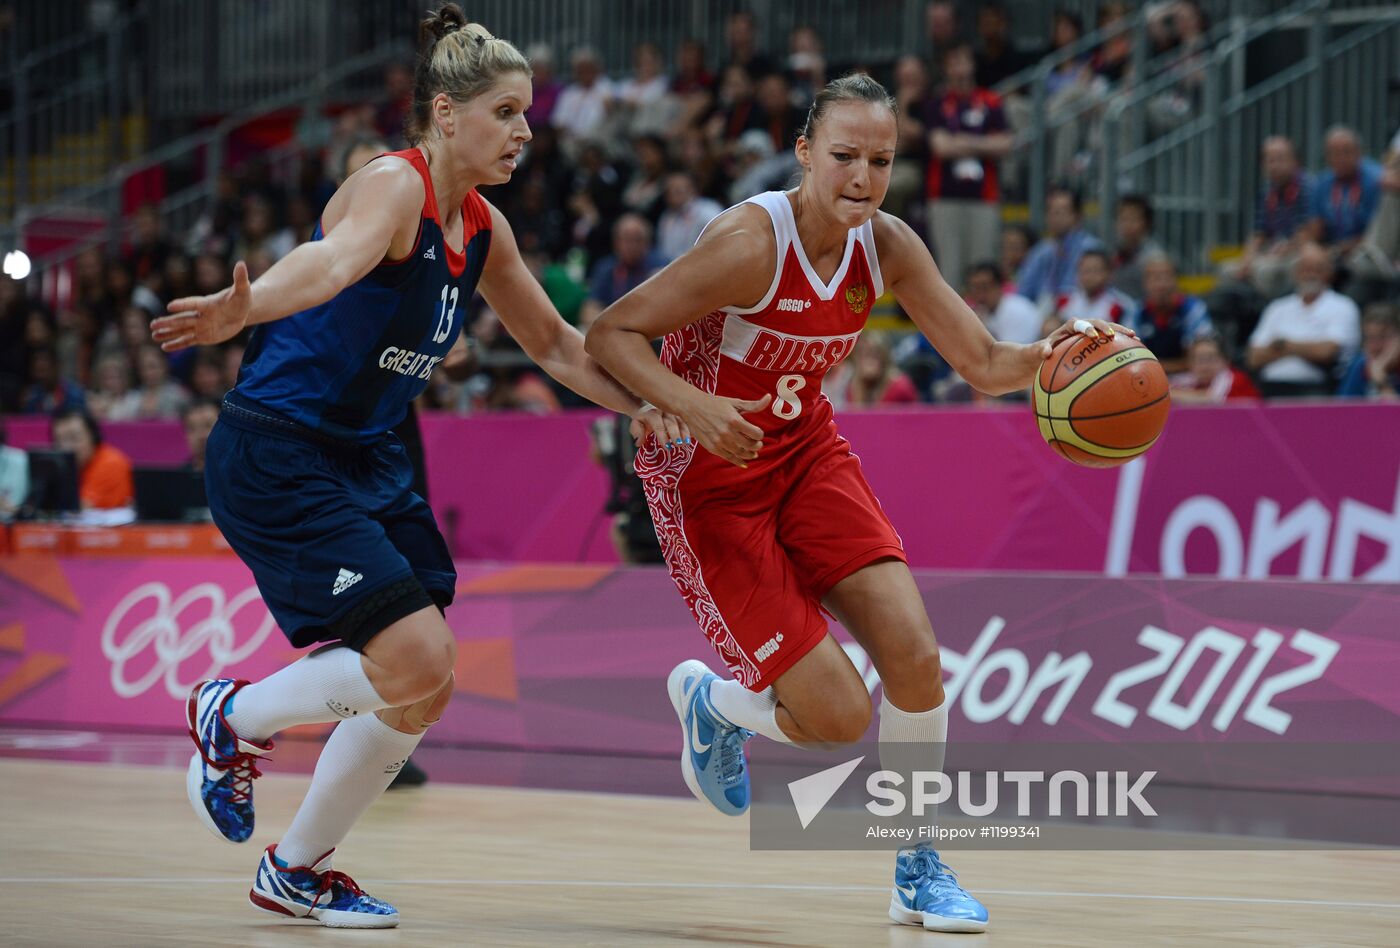 2012 Olympic Games. Women's Basketball. UK vs. Russia